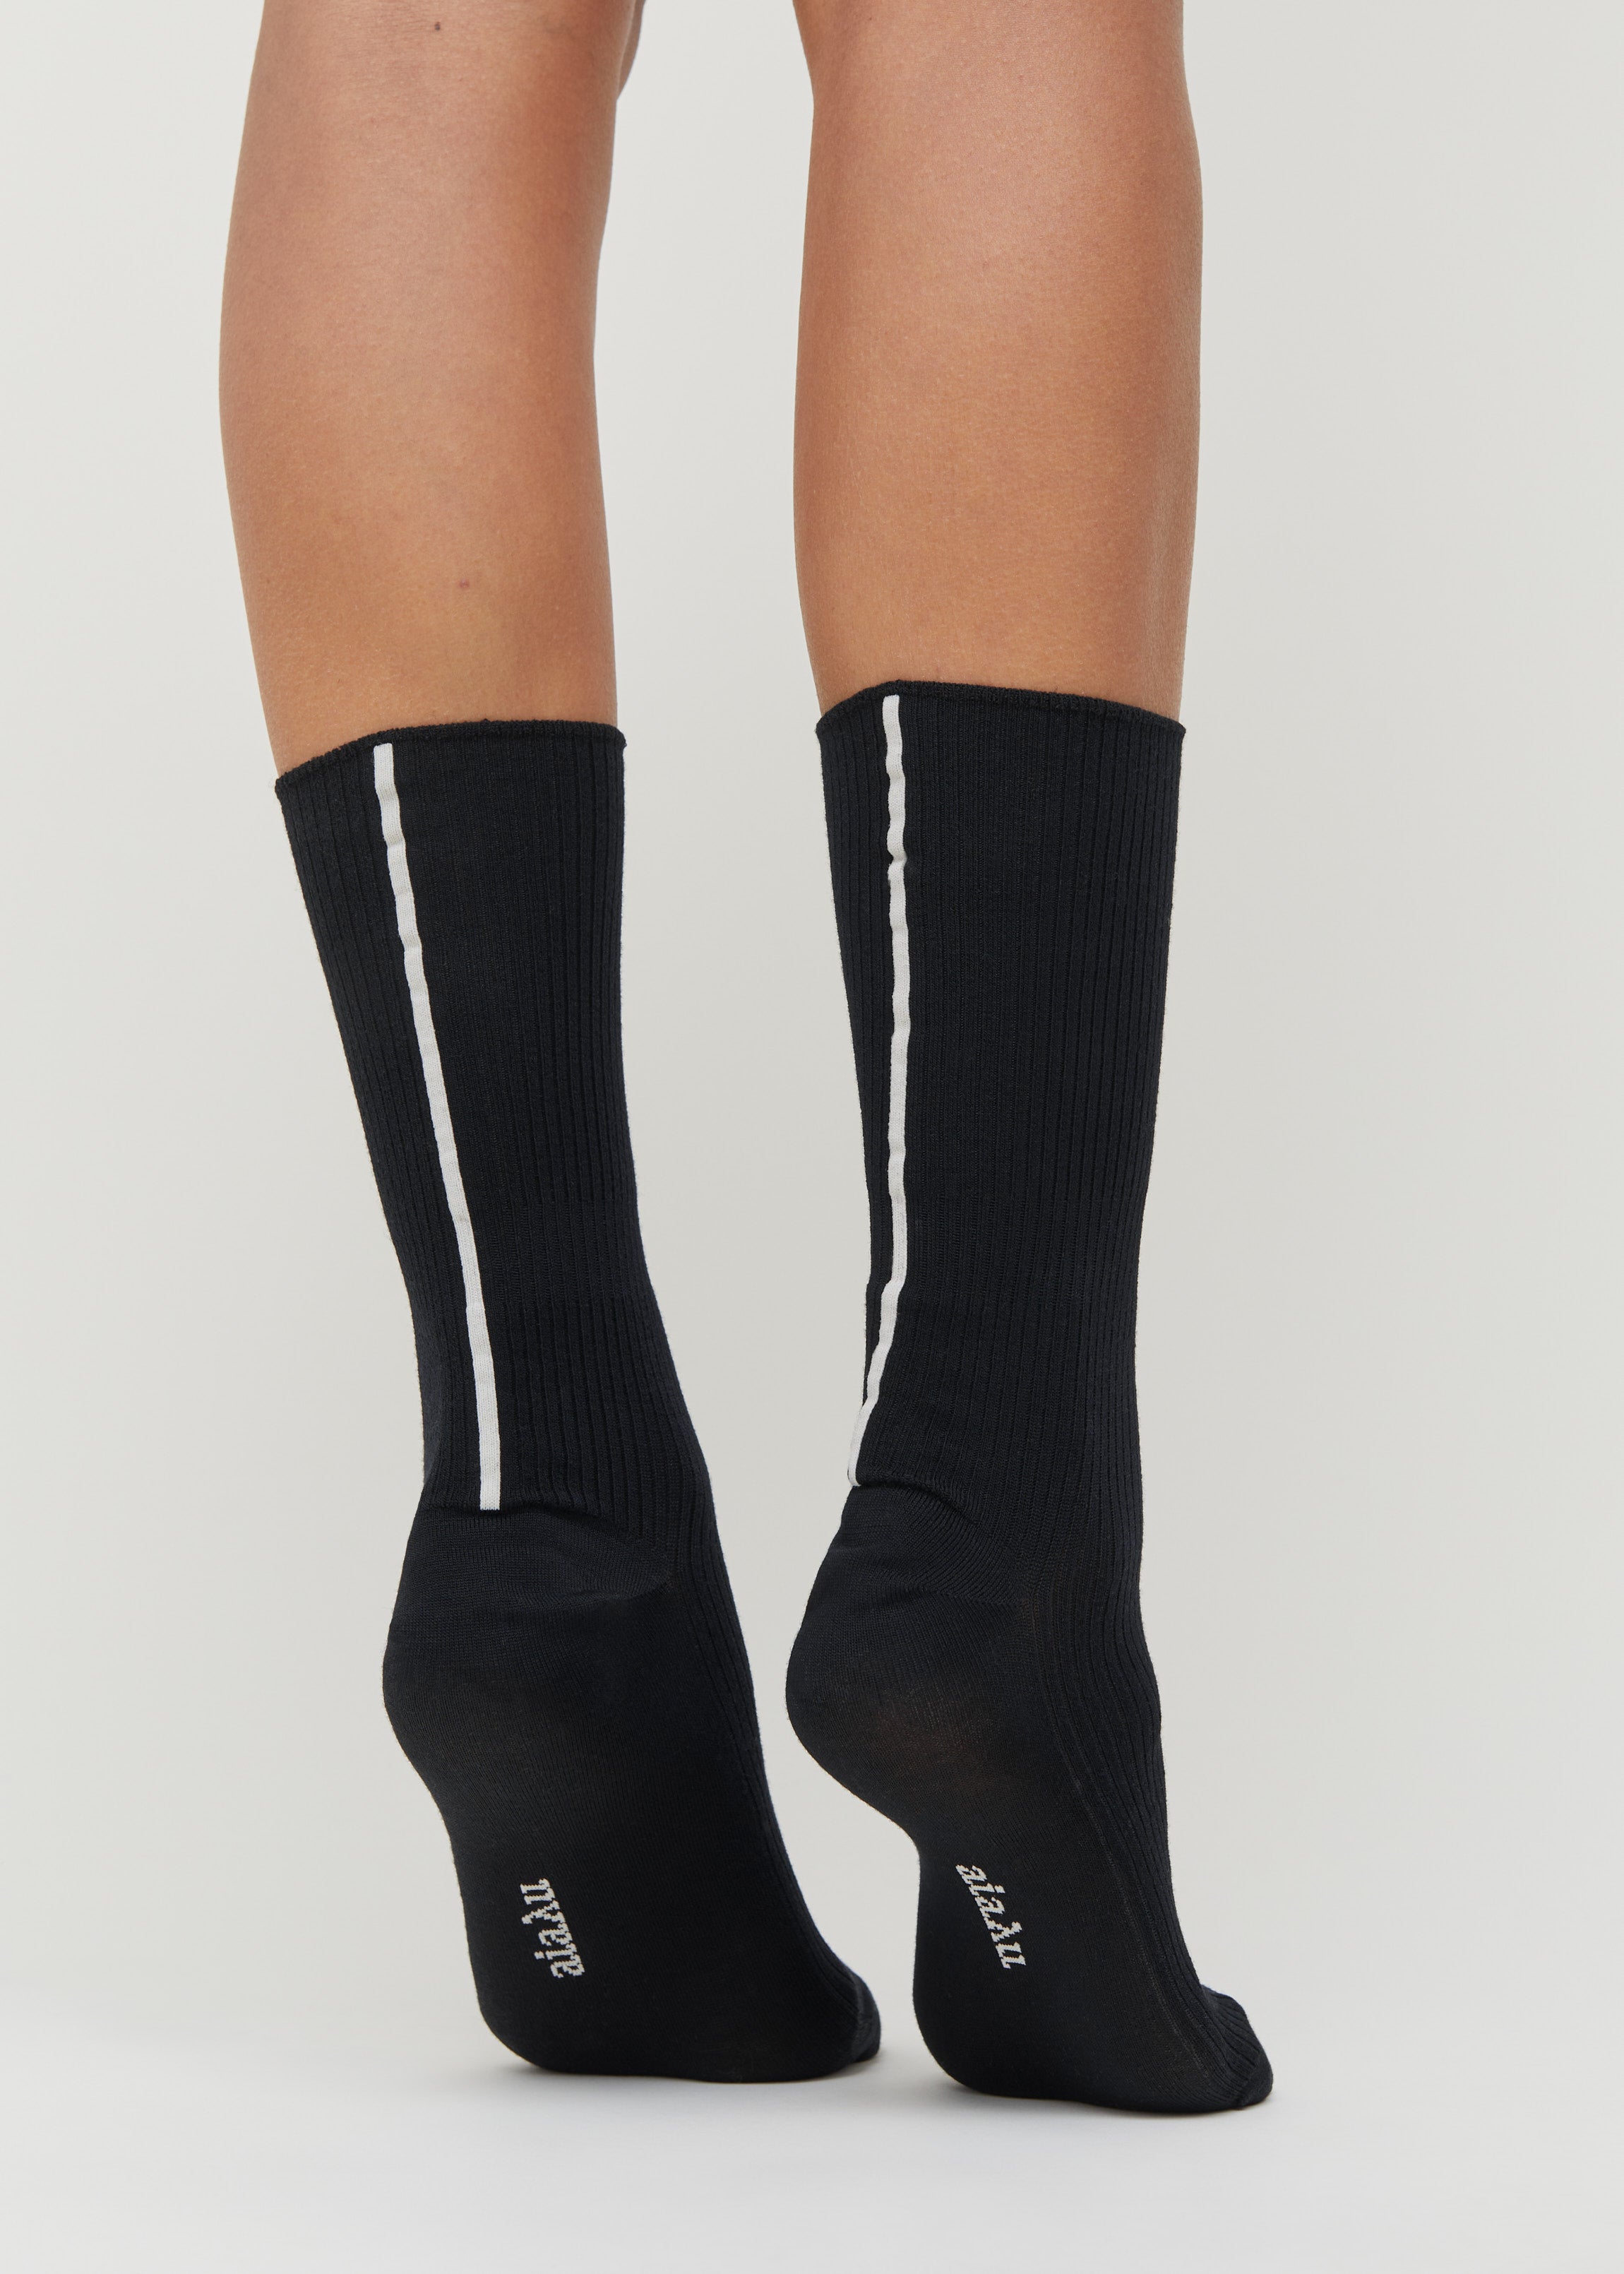 Wool detailed socks | Mix Black